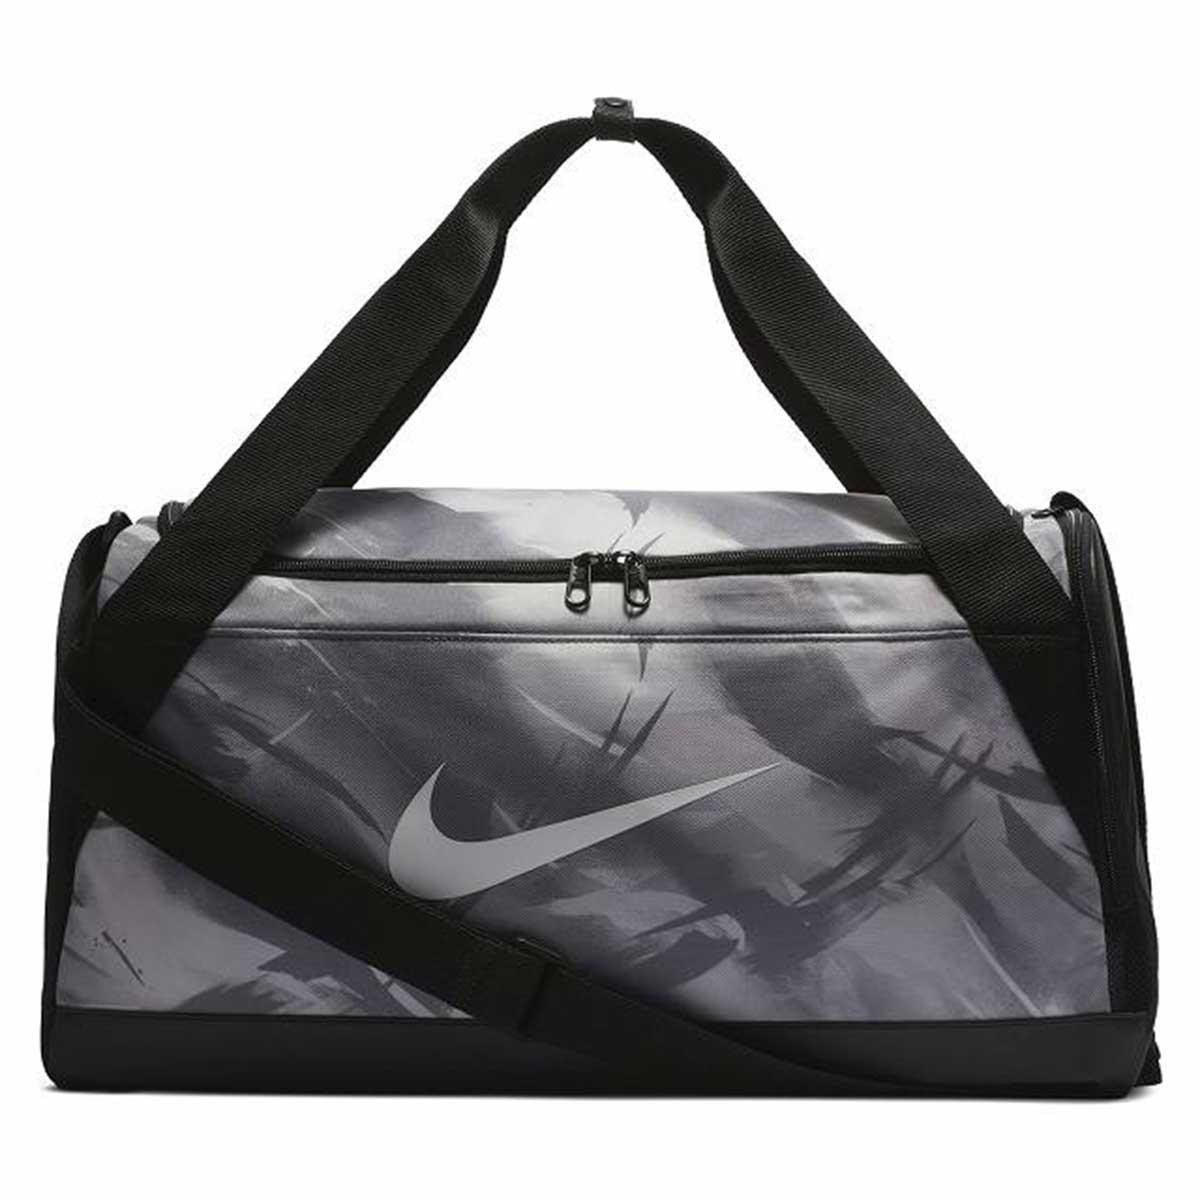 Buy Nike Brasilia Duffle Bag (Grey/Black) Online at Lowest Price in India